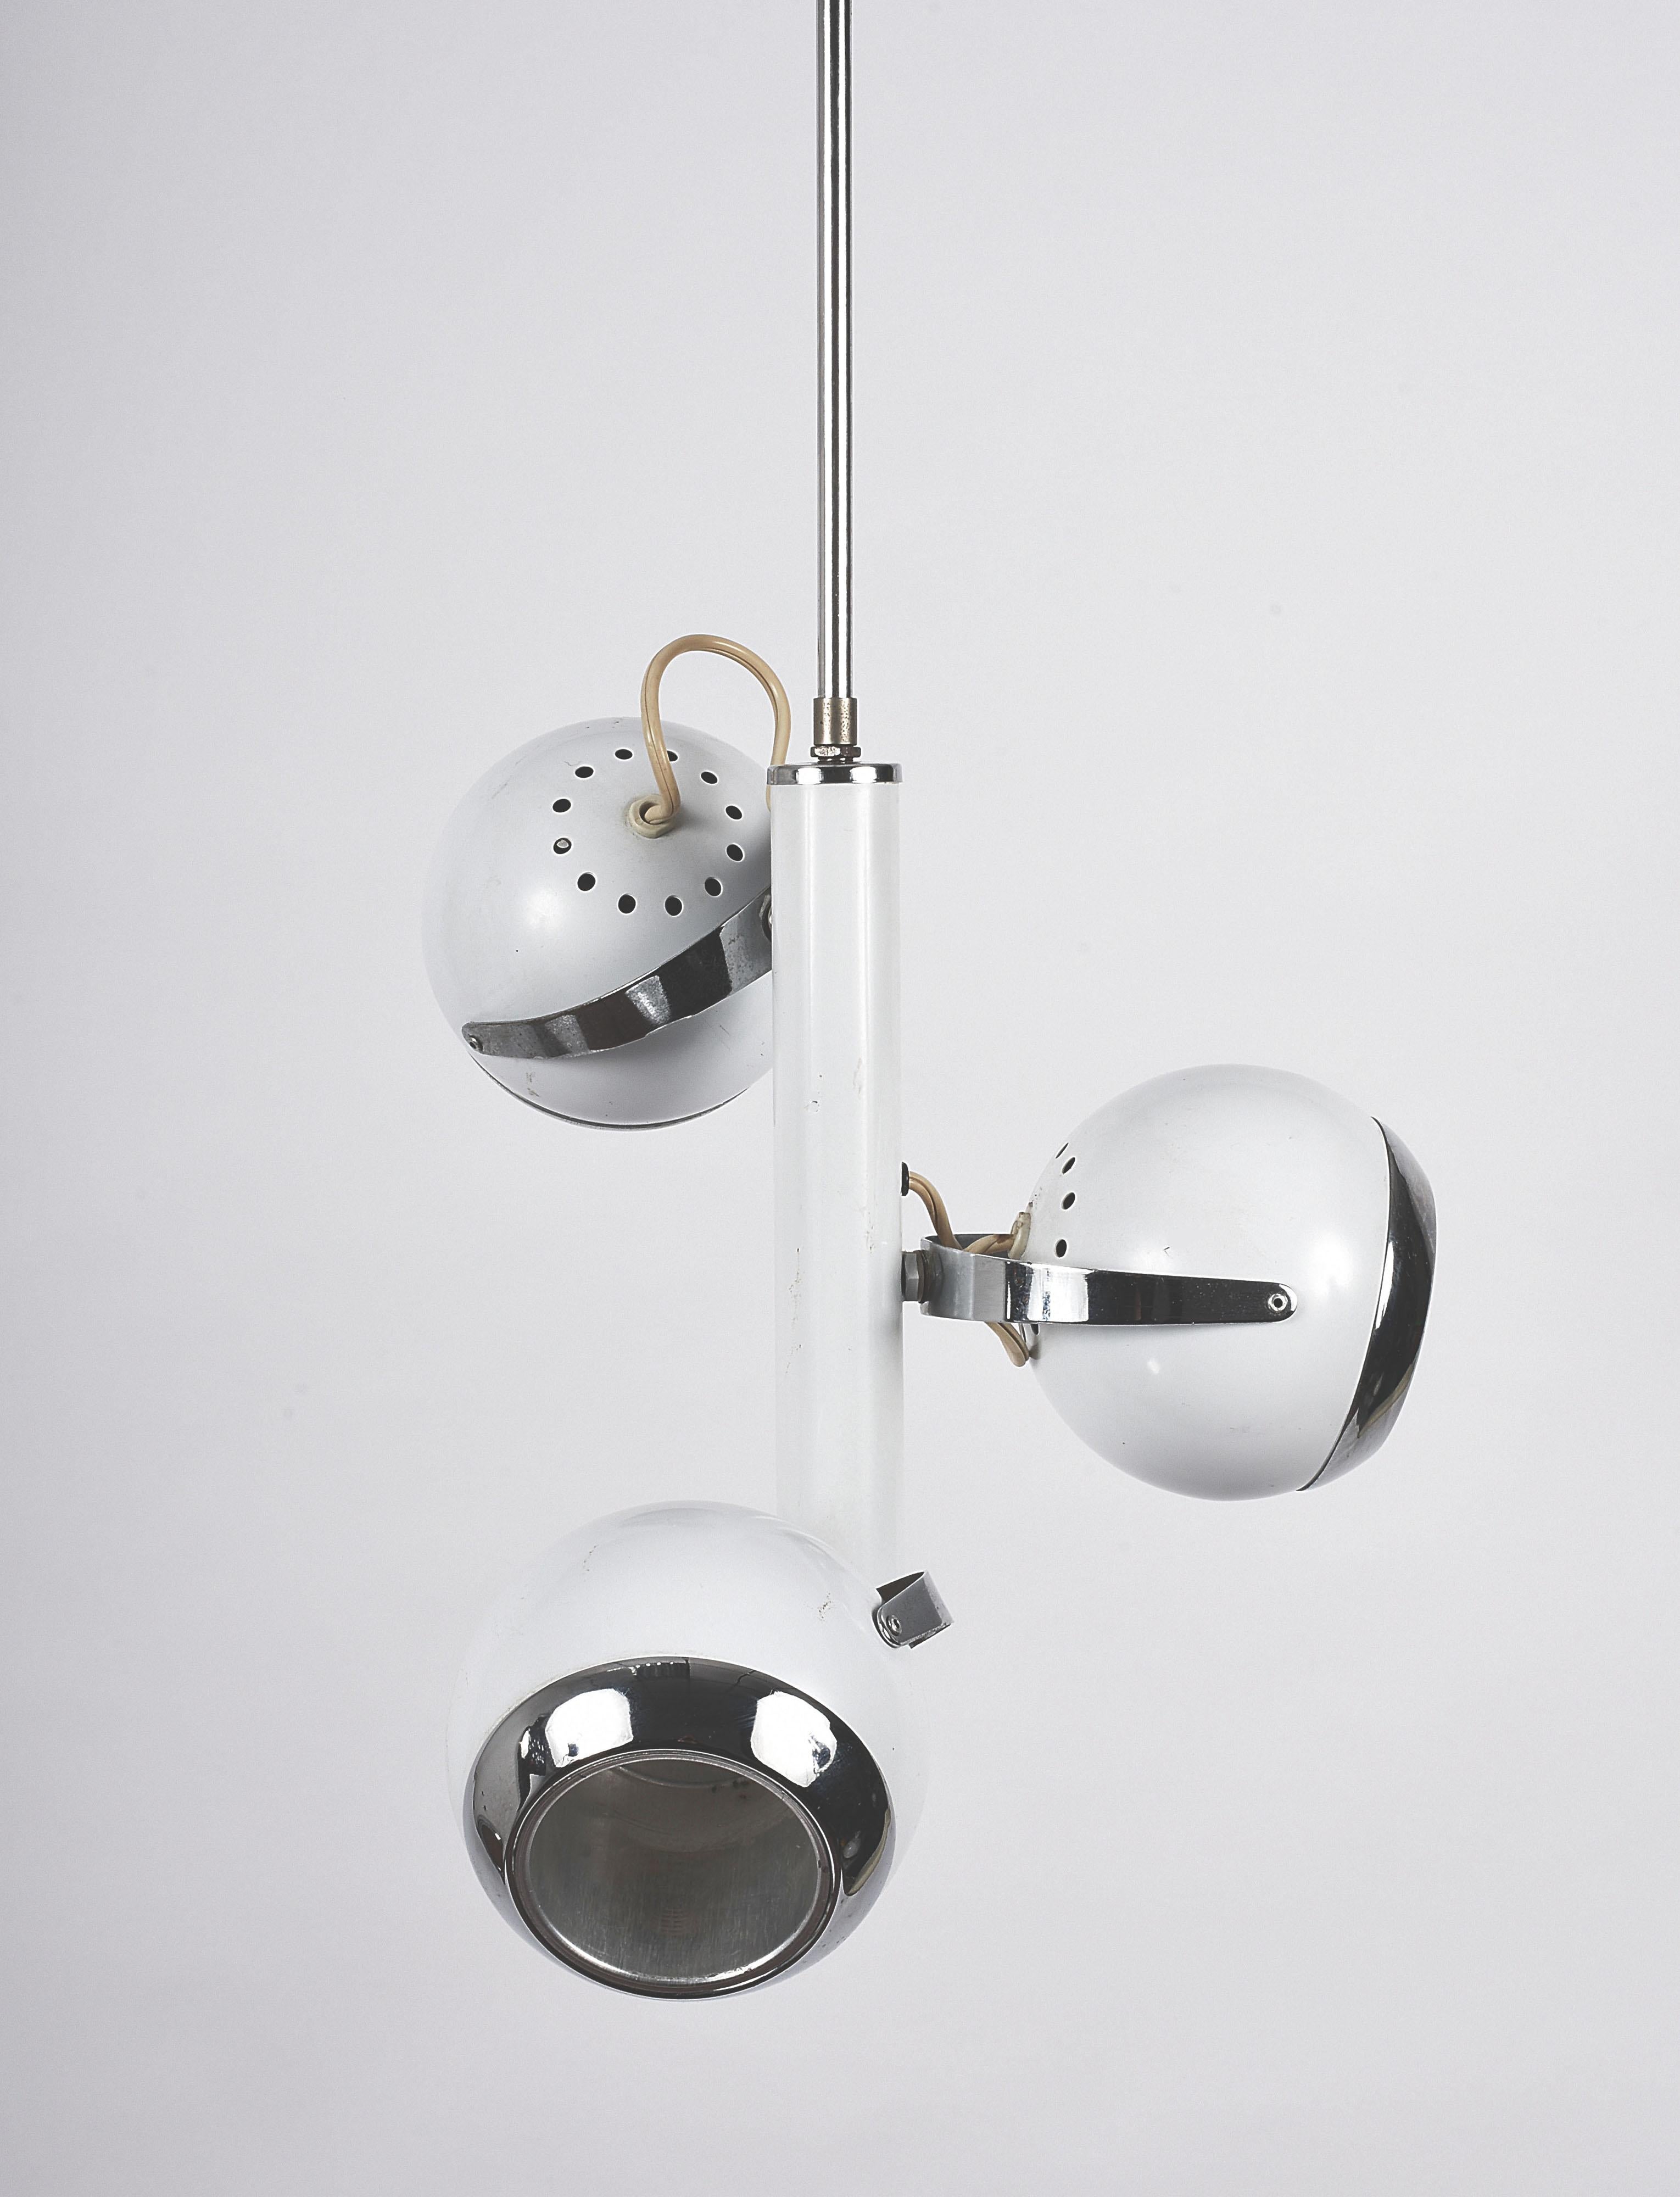 Chrome and enamelled Space Age three-light chandelier.
Beautiful chandelier with three adjustable spheres.


Measures: Diameter 35 cm, height 62. Spheres 13 cm in diameter.